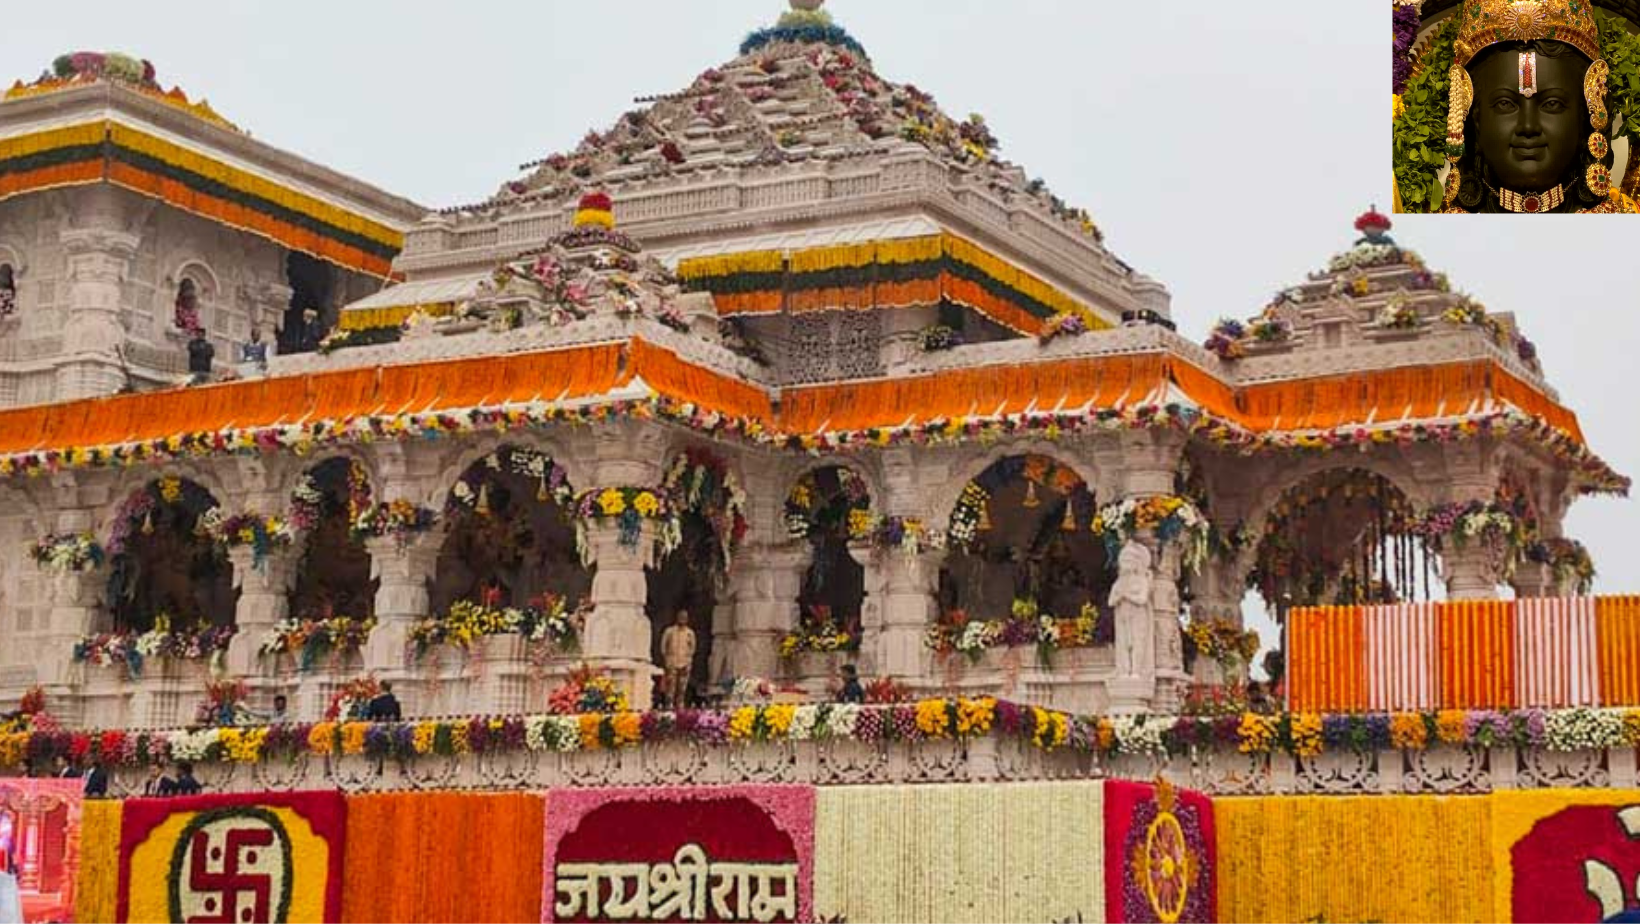 The Ayodhya Ram Temple at Ram Janmbhoomi